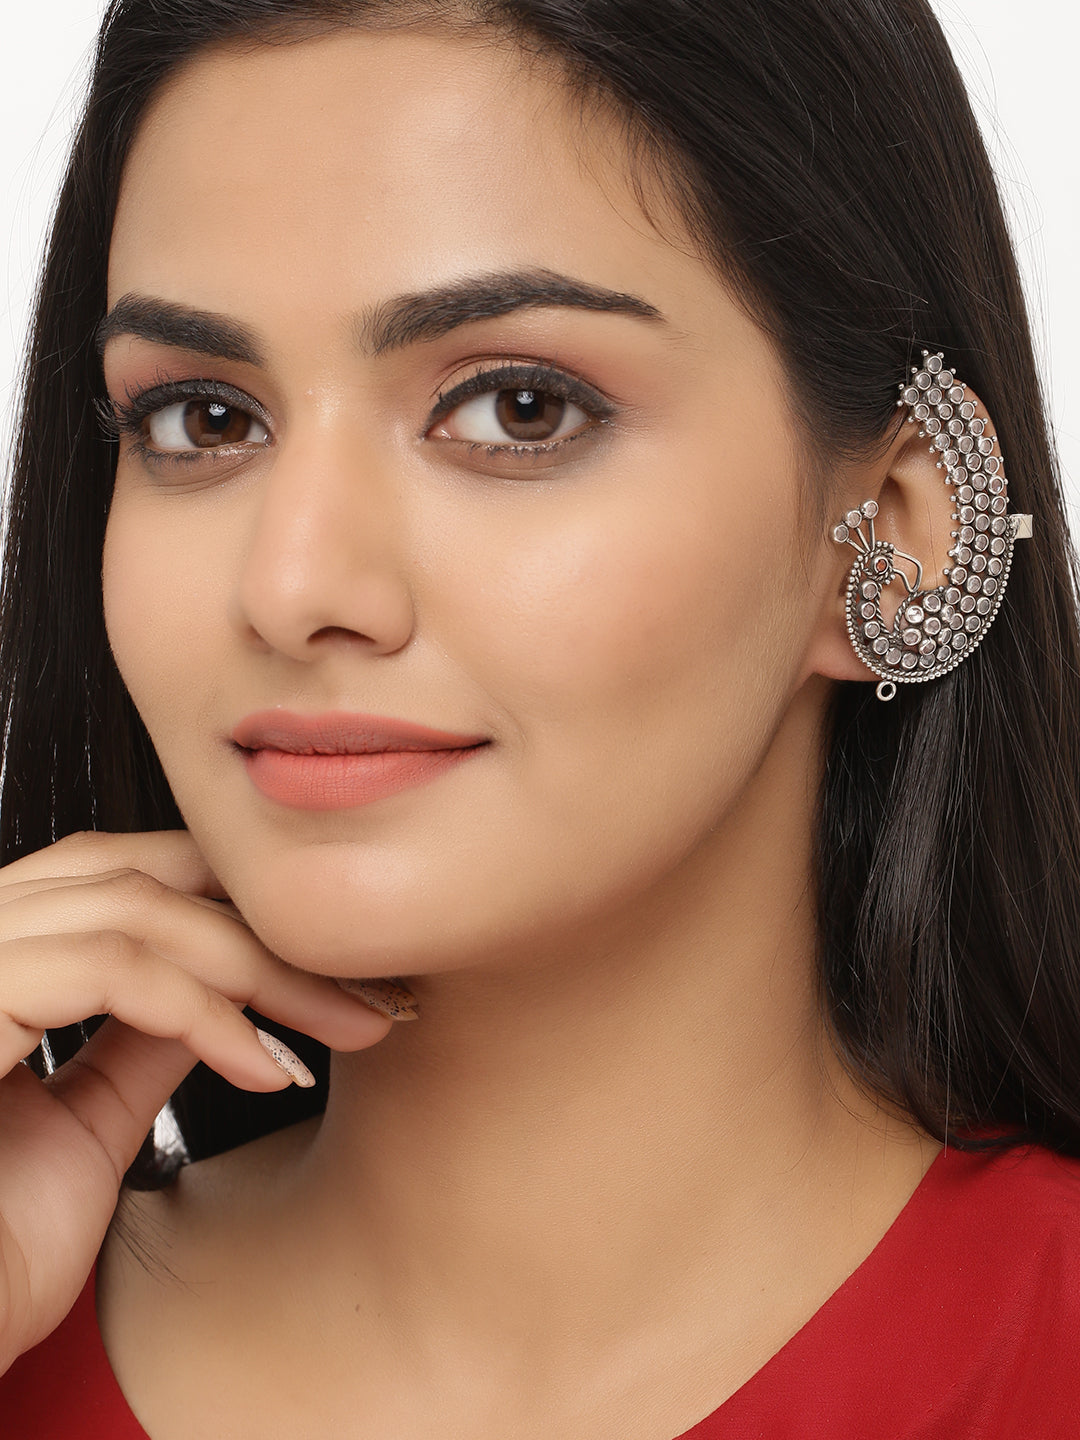 Buy 150+ Everyday Earrings Online | BlueStone.com - India's #1 Online  Jewellery Brand